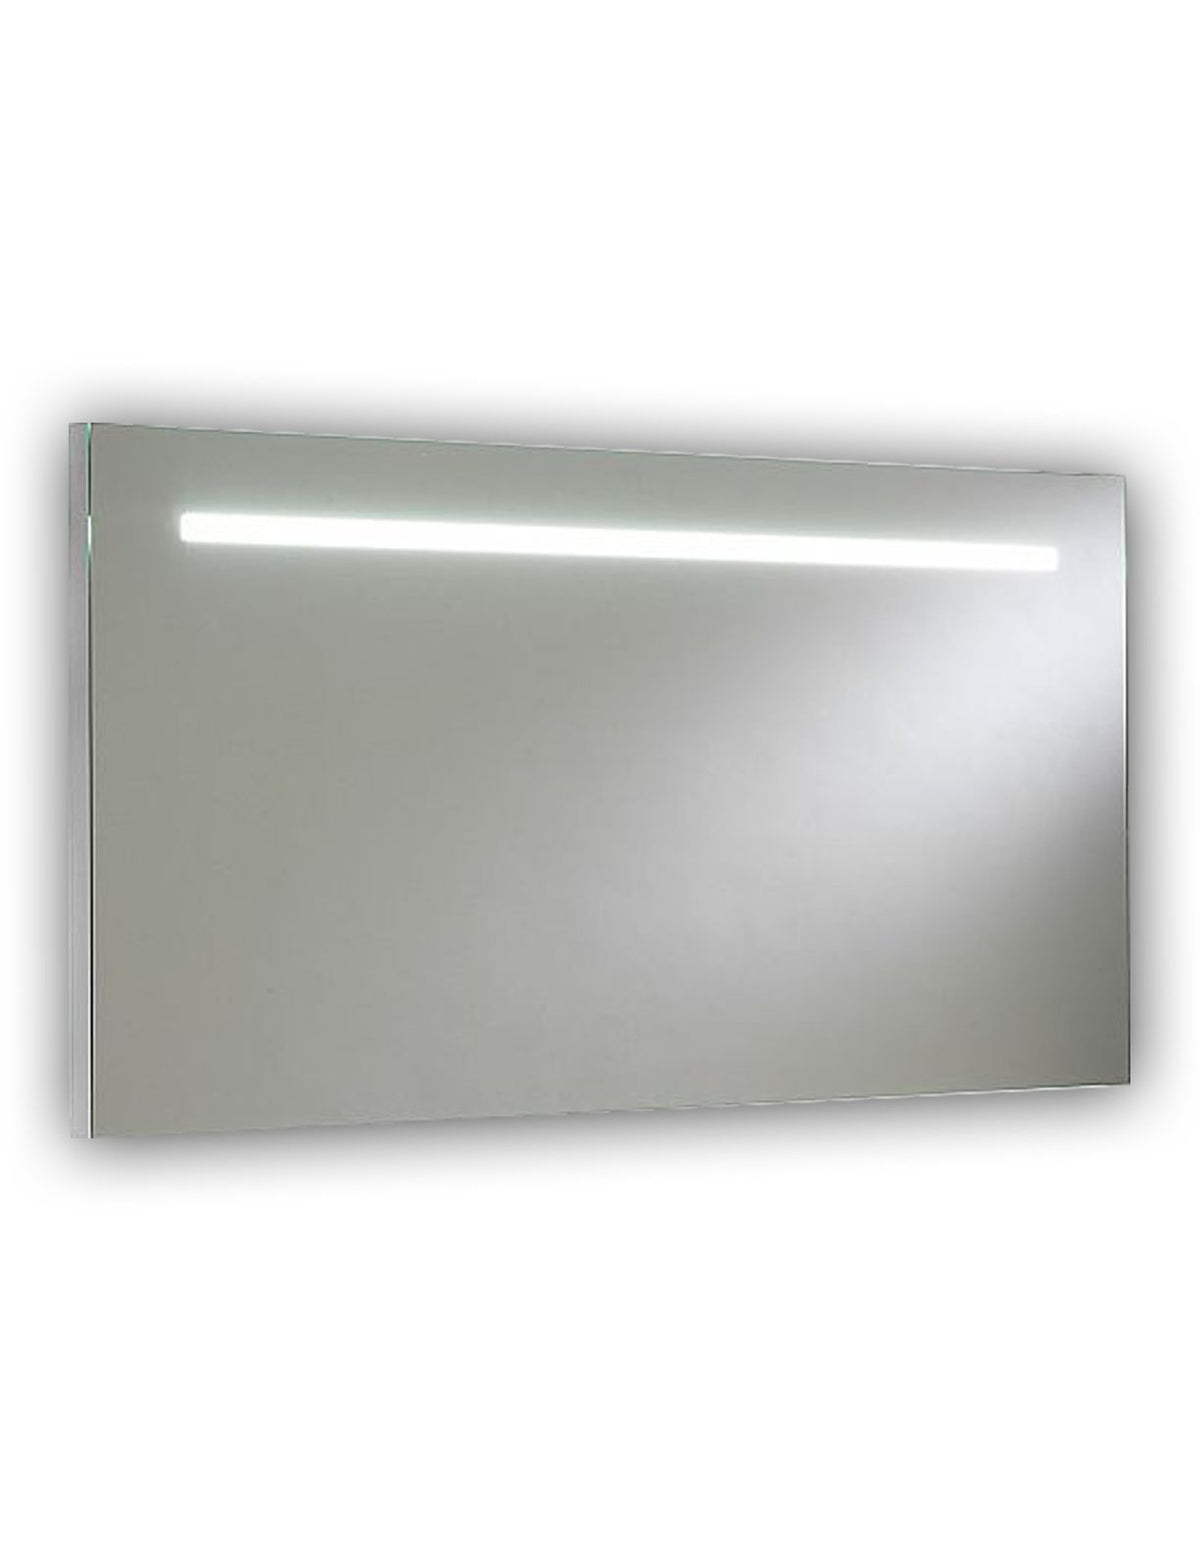 L1 Cool White LED Mirror